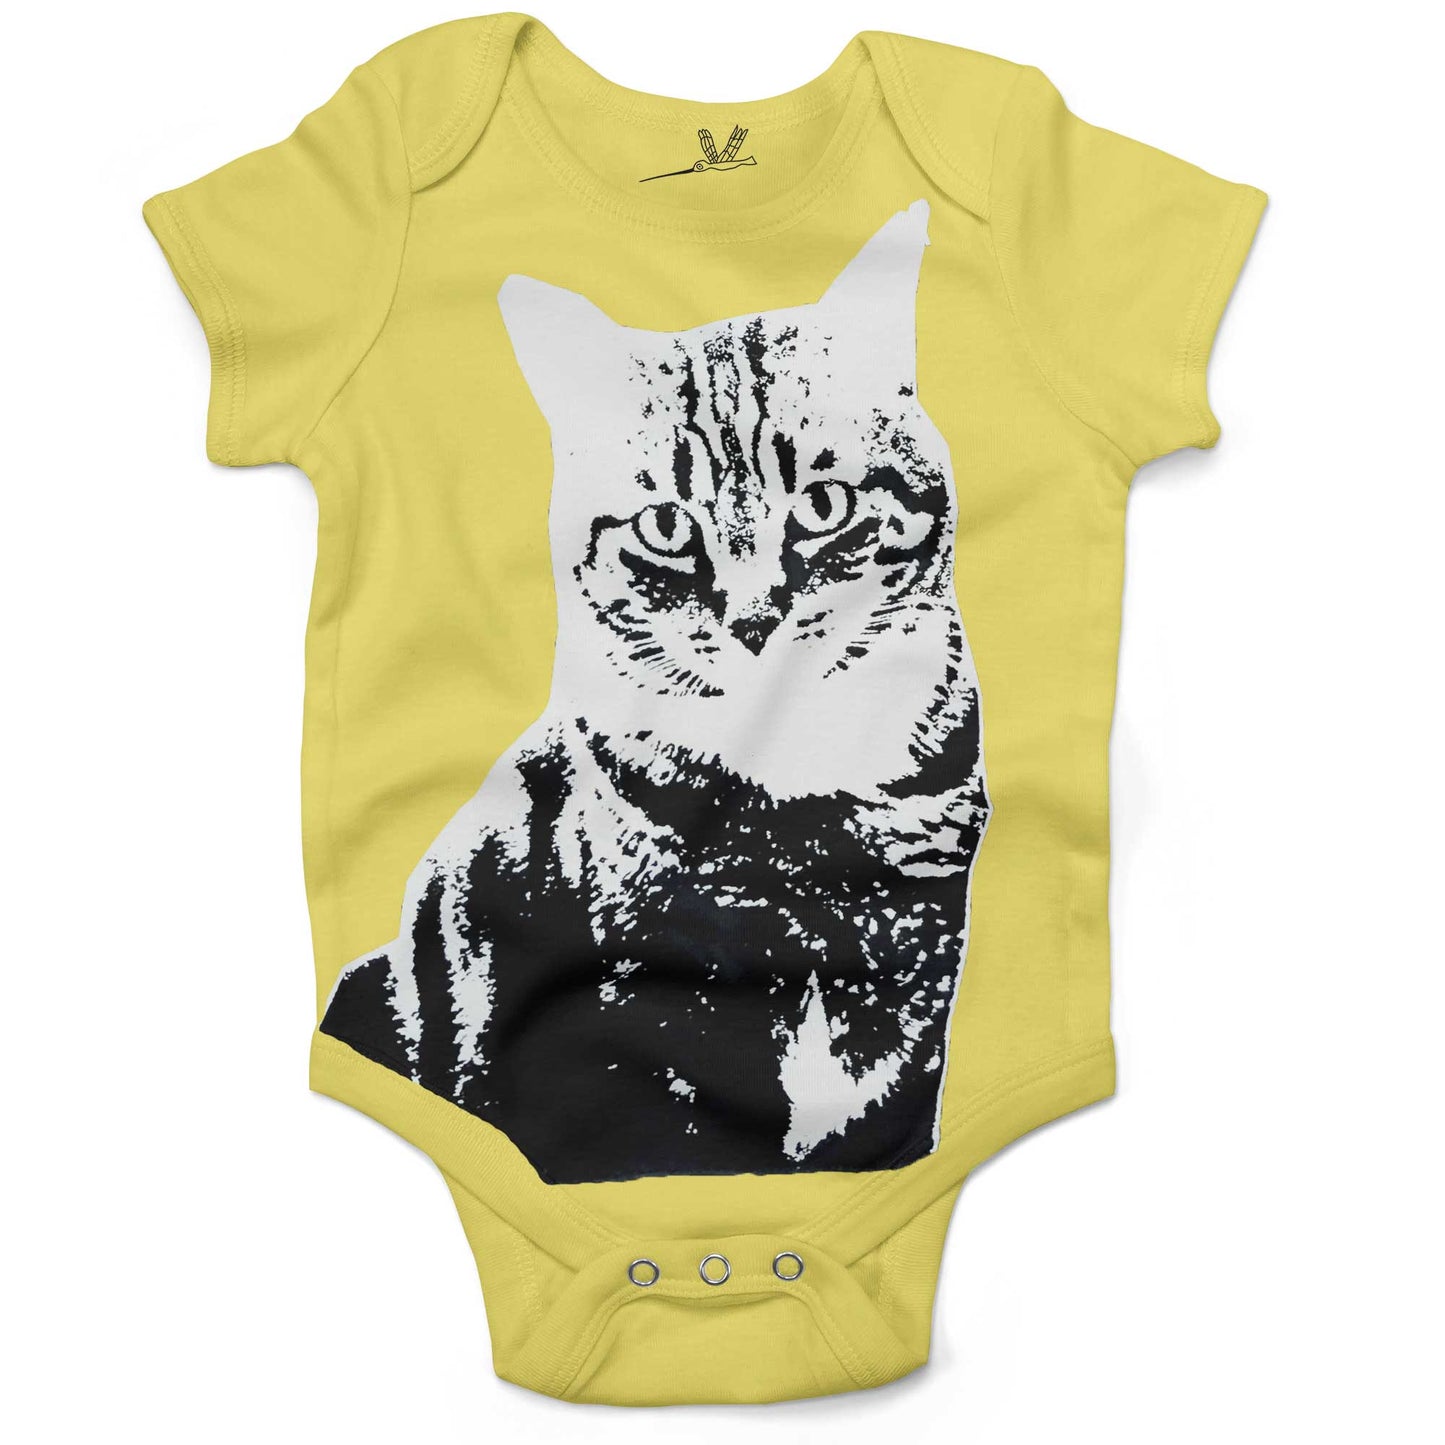 Black & White Cat Infant Bodysuit or Raglan Baby Tee-Yellow-3-6 months